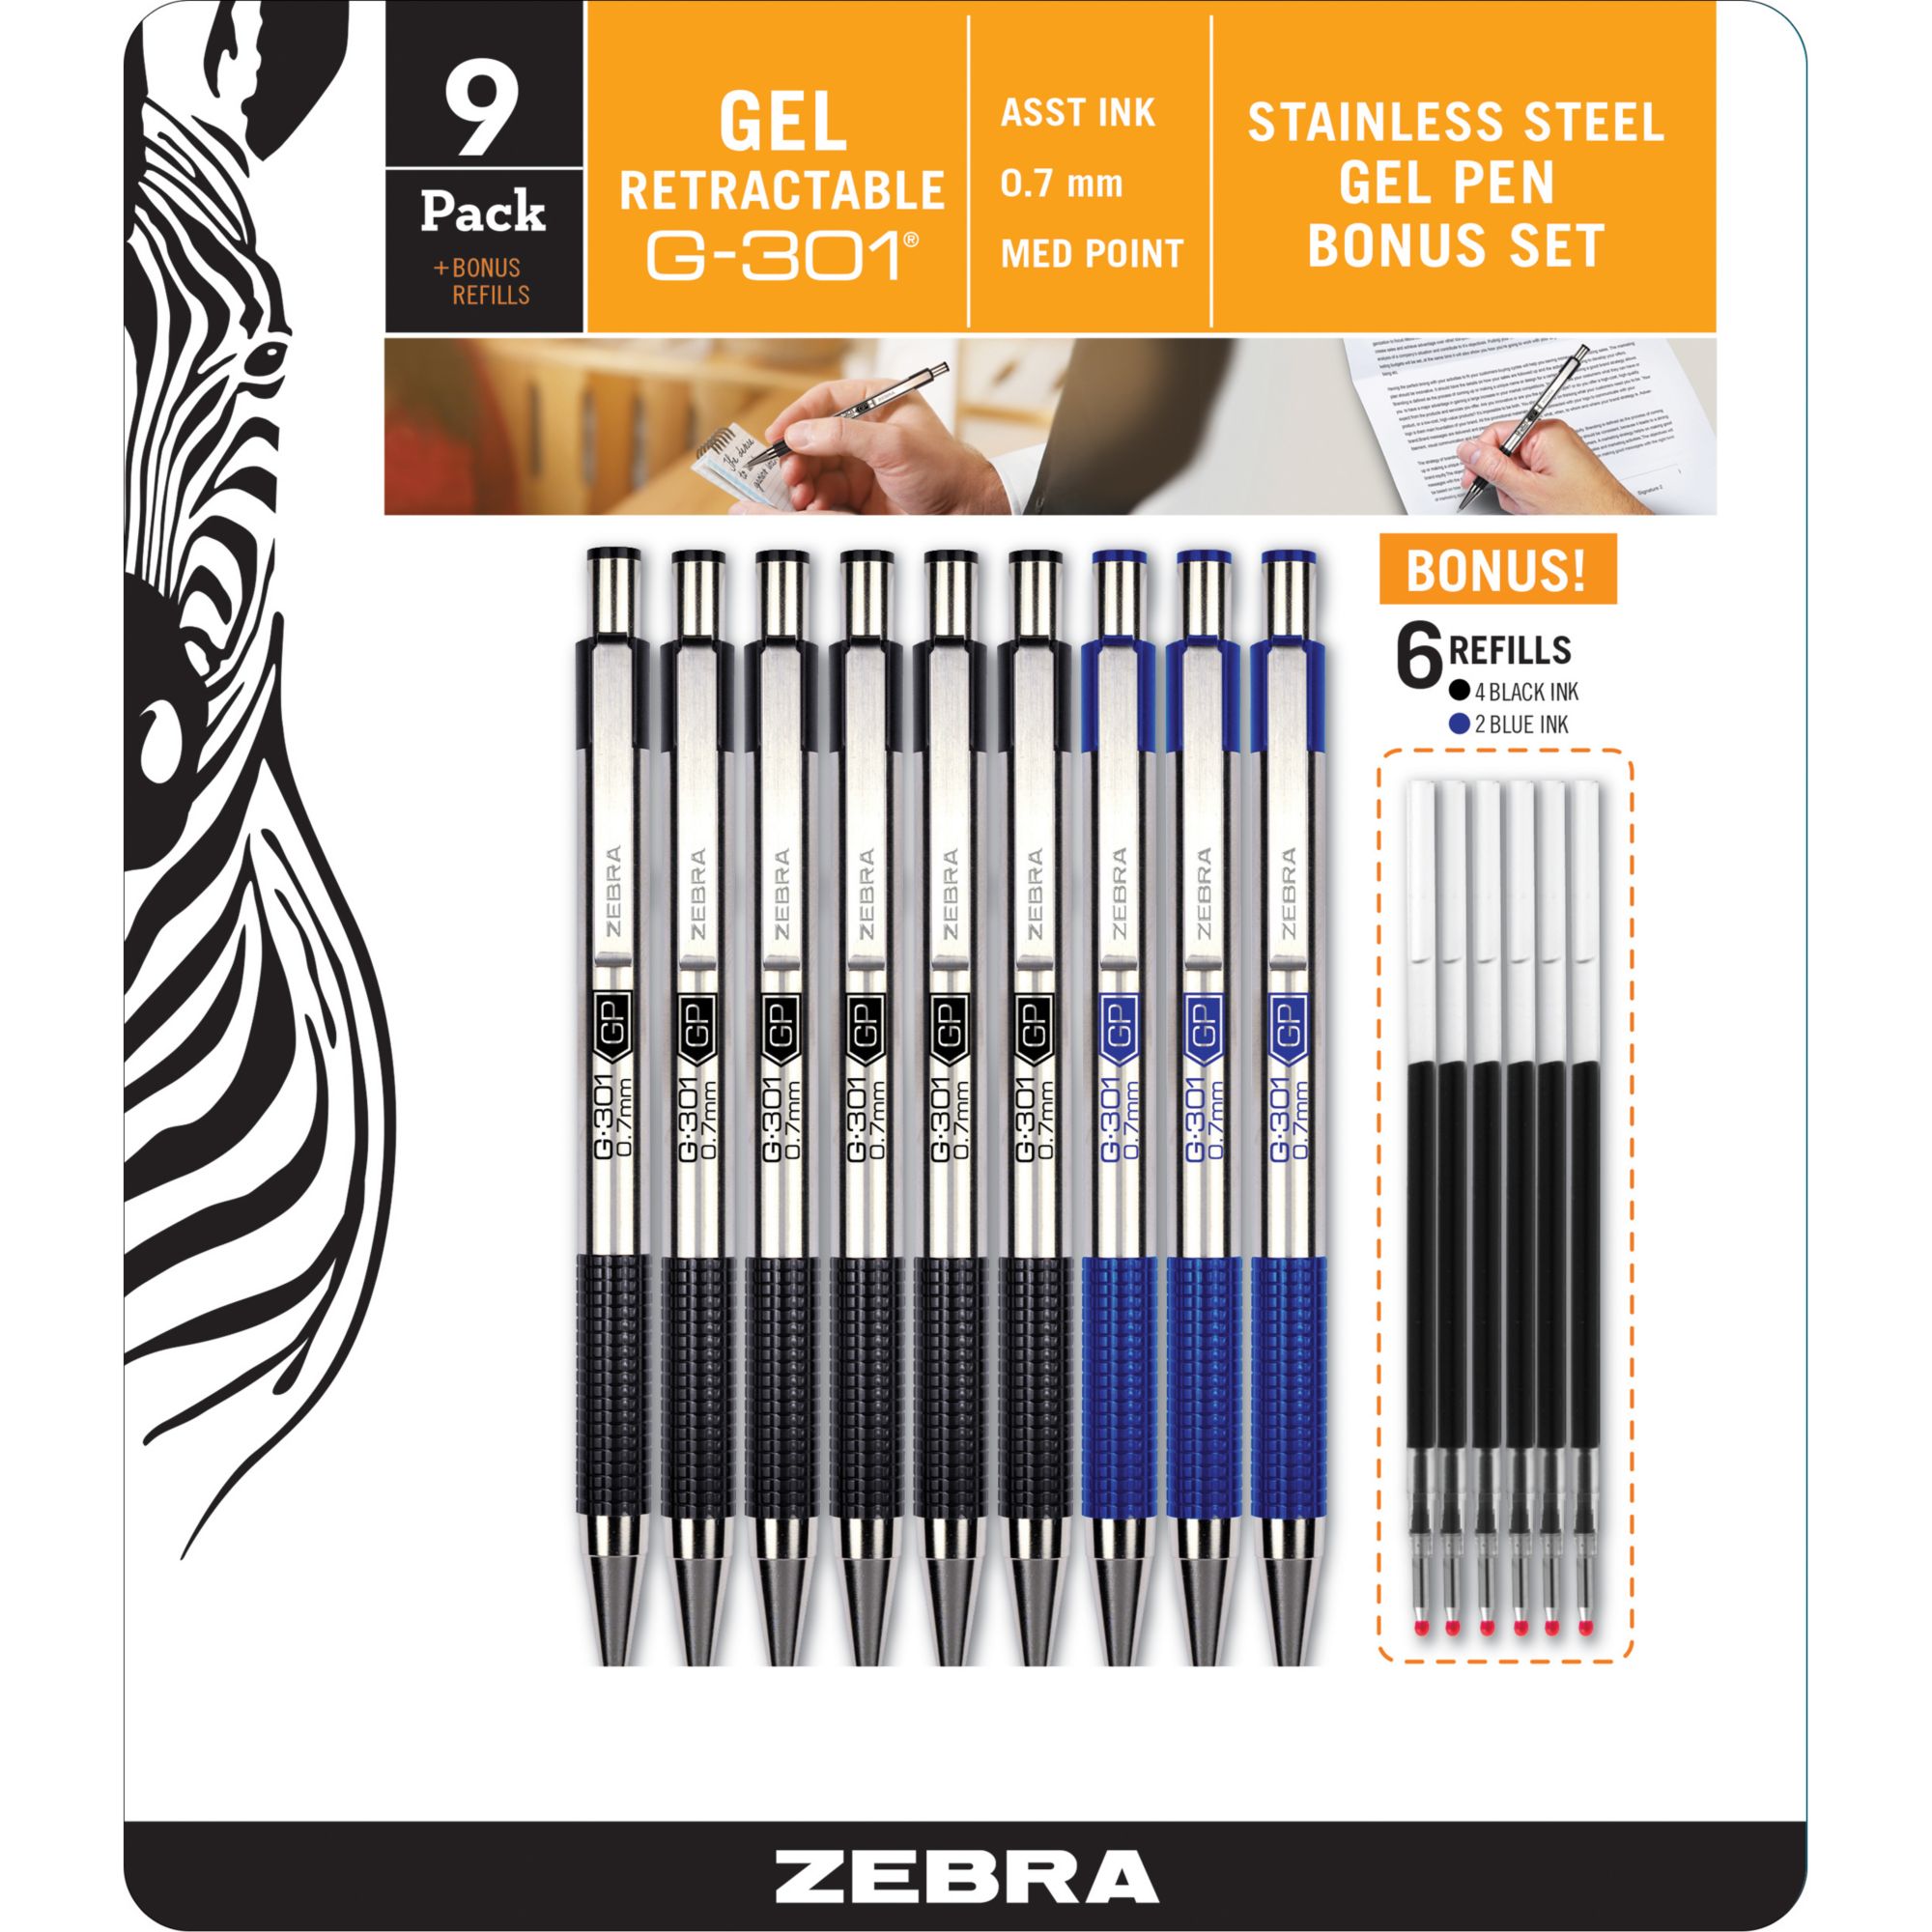 Zebra G-301 Steel Retractable Gel Pen with 0.7mm Medium Point, 9 per Pack with 6 Refills - Black